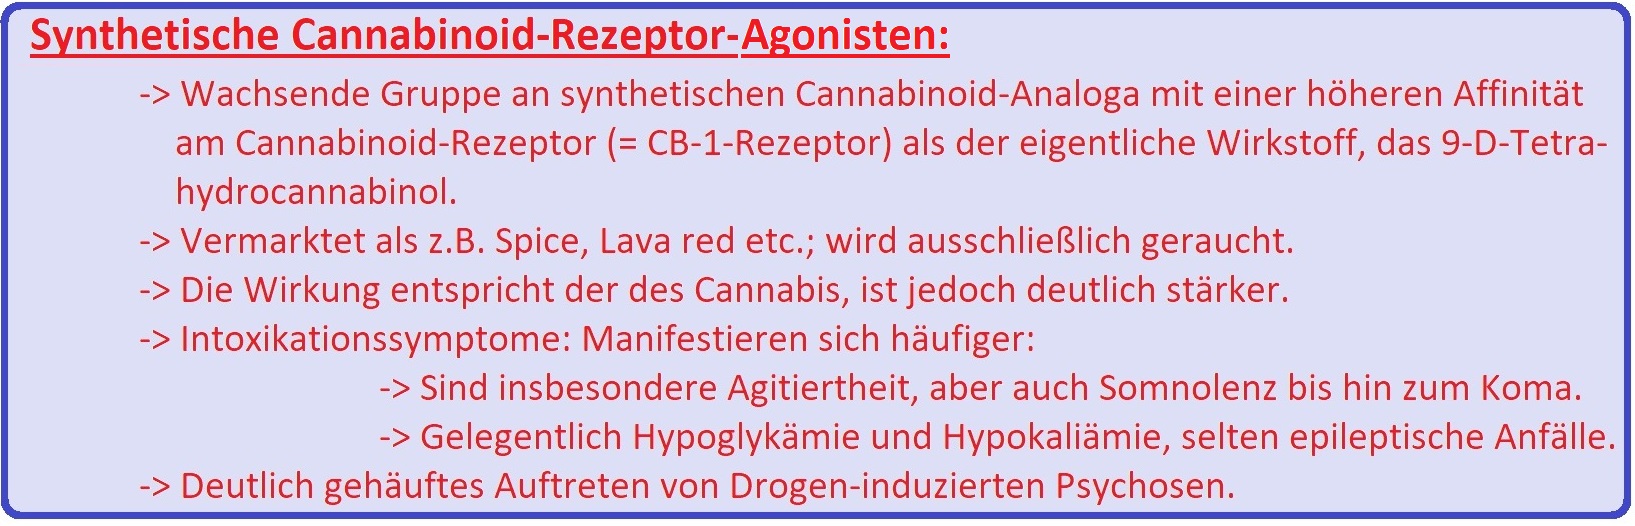 457 Synthetische Cannabinoid Rezeptor Antagonisten